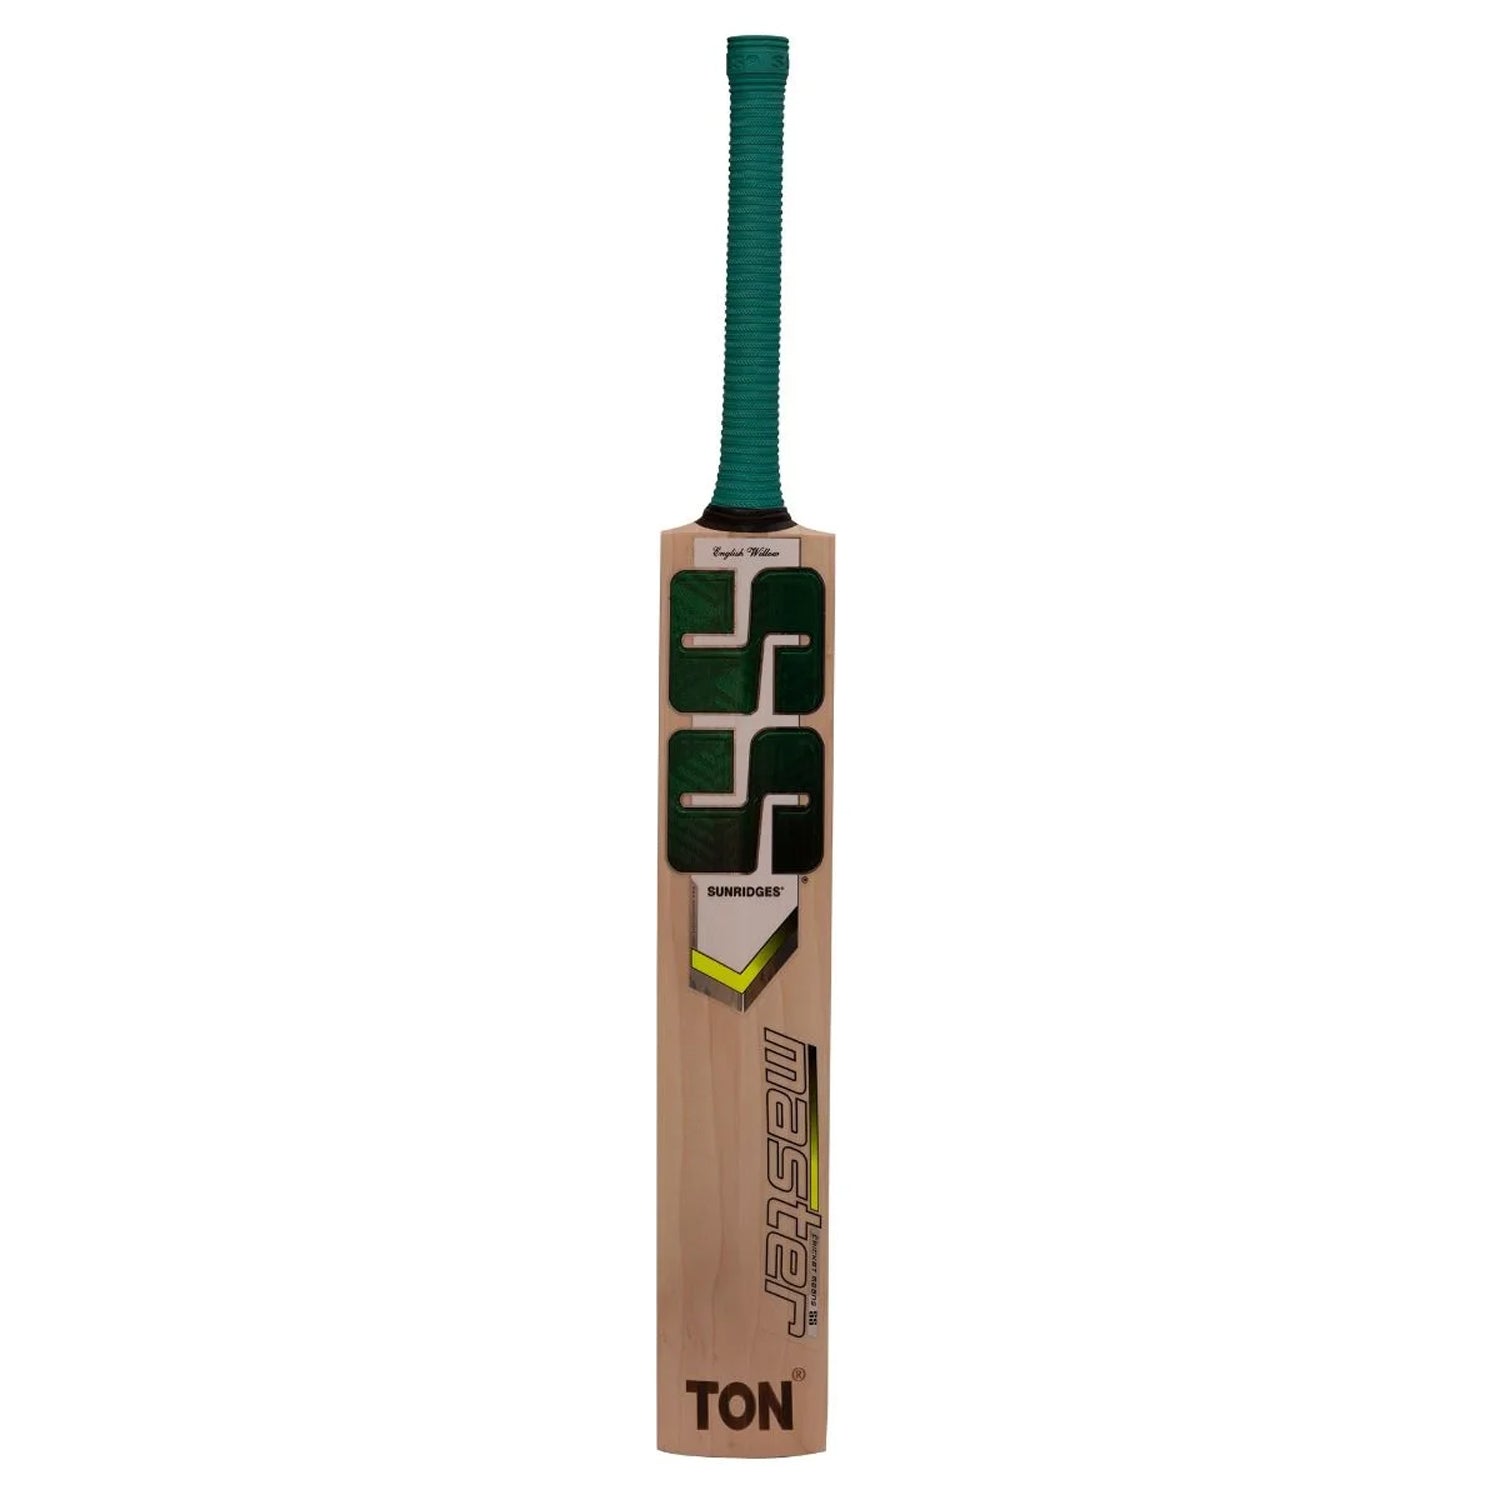 SS Master 1000 English Willow Cricket Bat - Best Price online Prokicksports.com